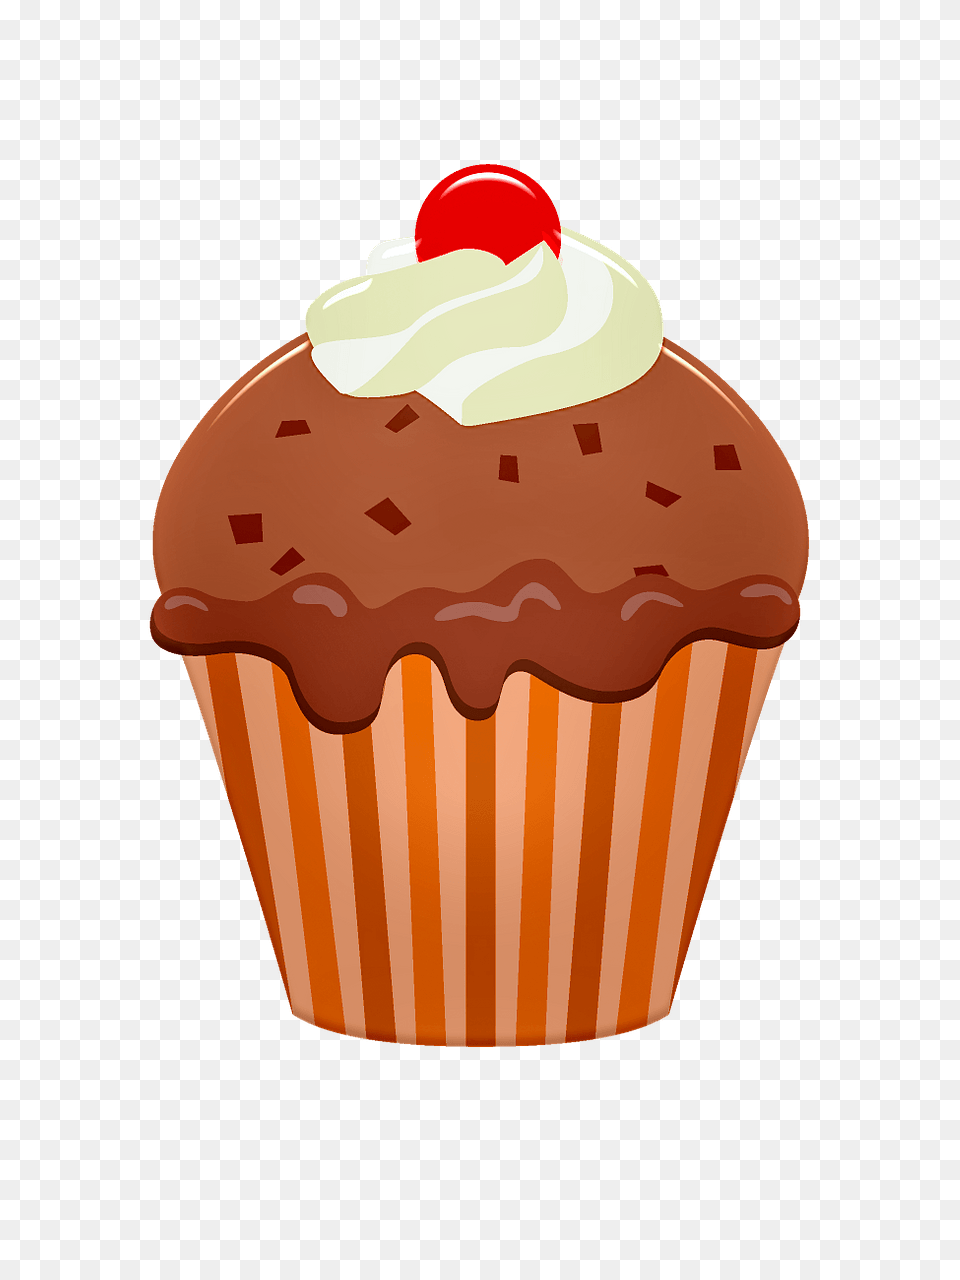 Cupcake Clipart, Cake, Cream, Dessert, Food Png